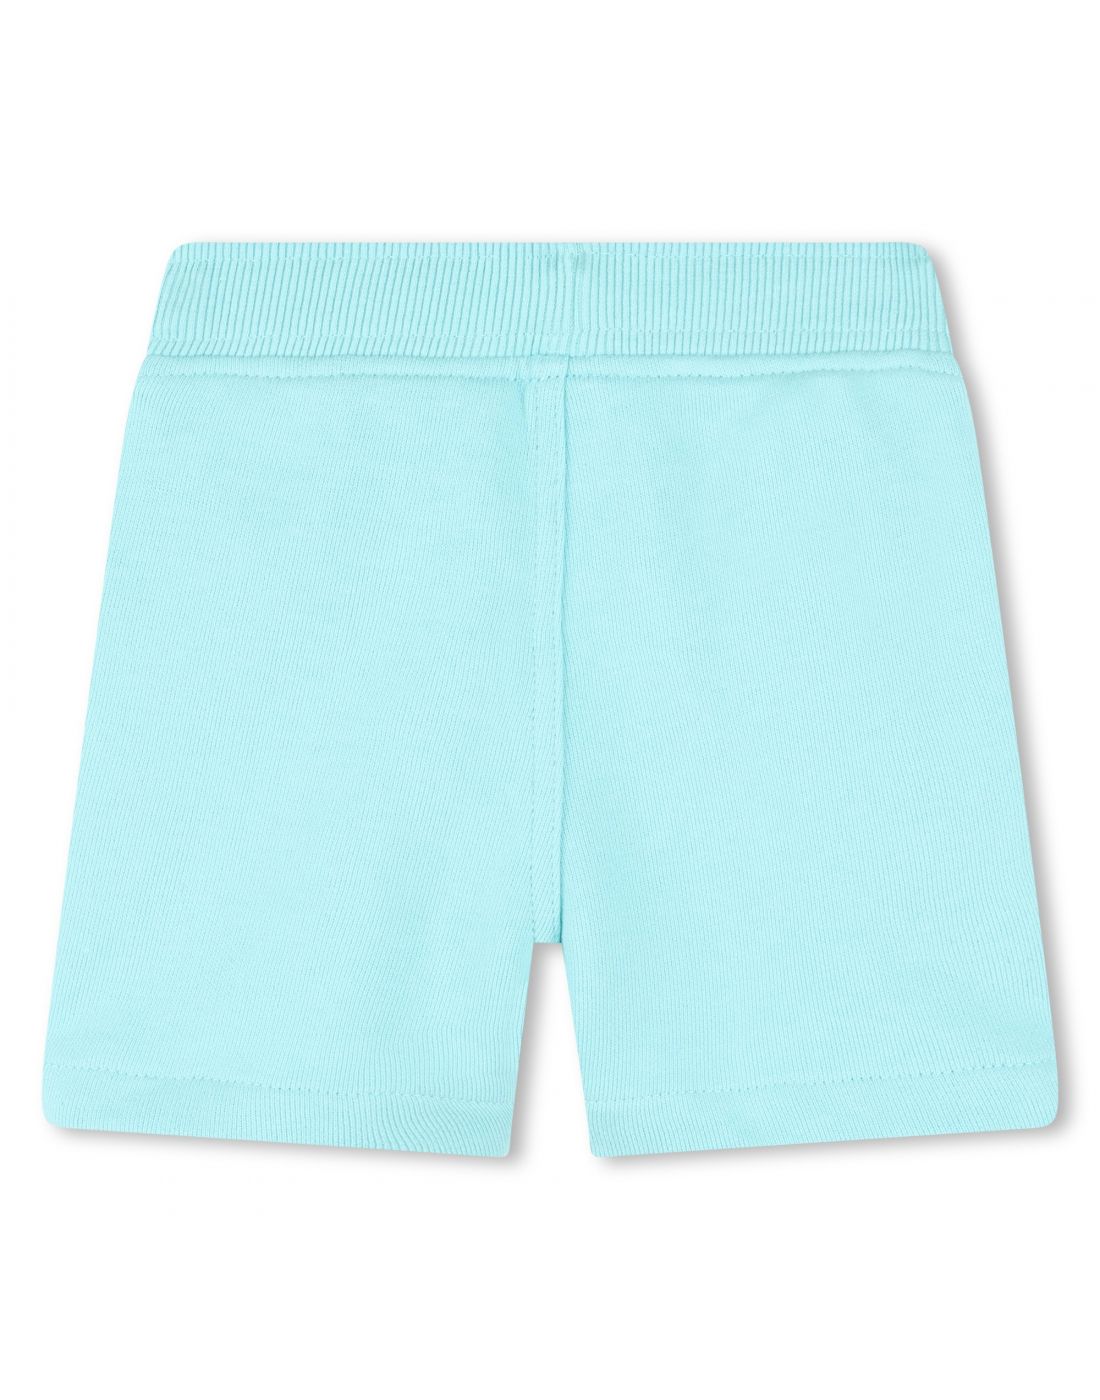 Timberland Baby Boys Shorts